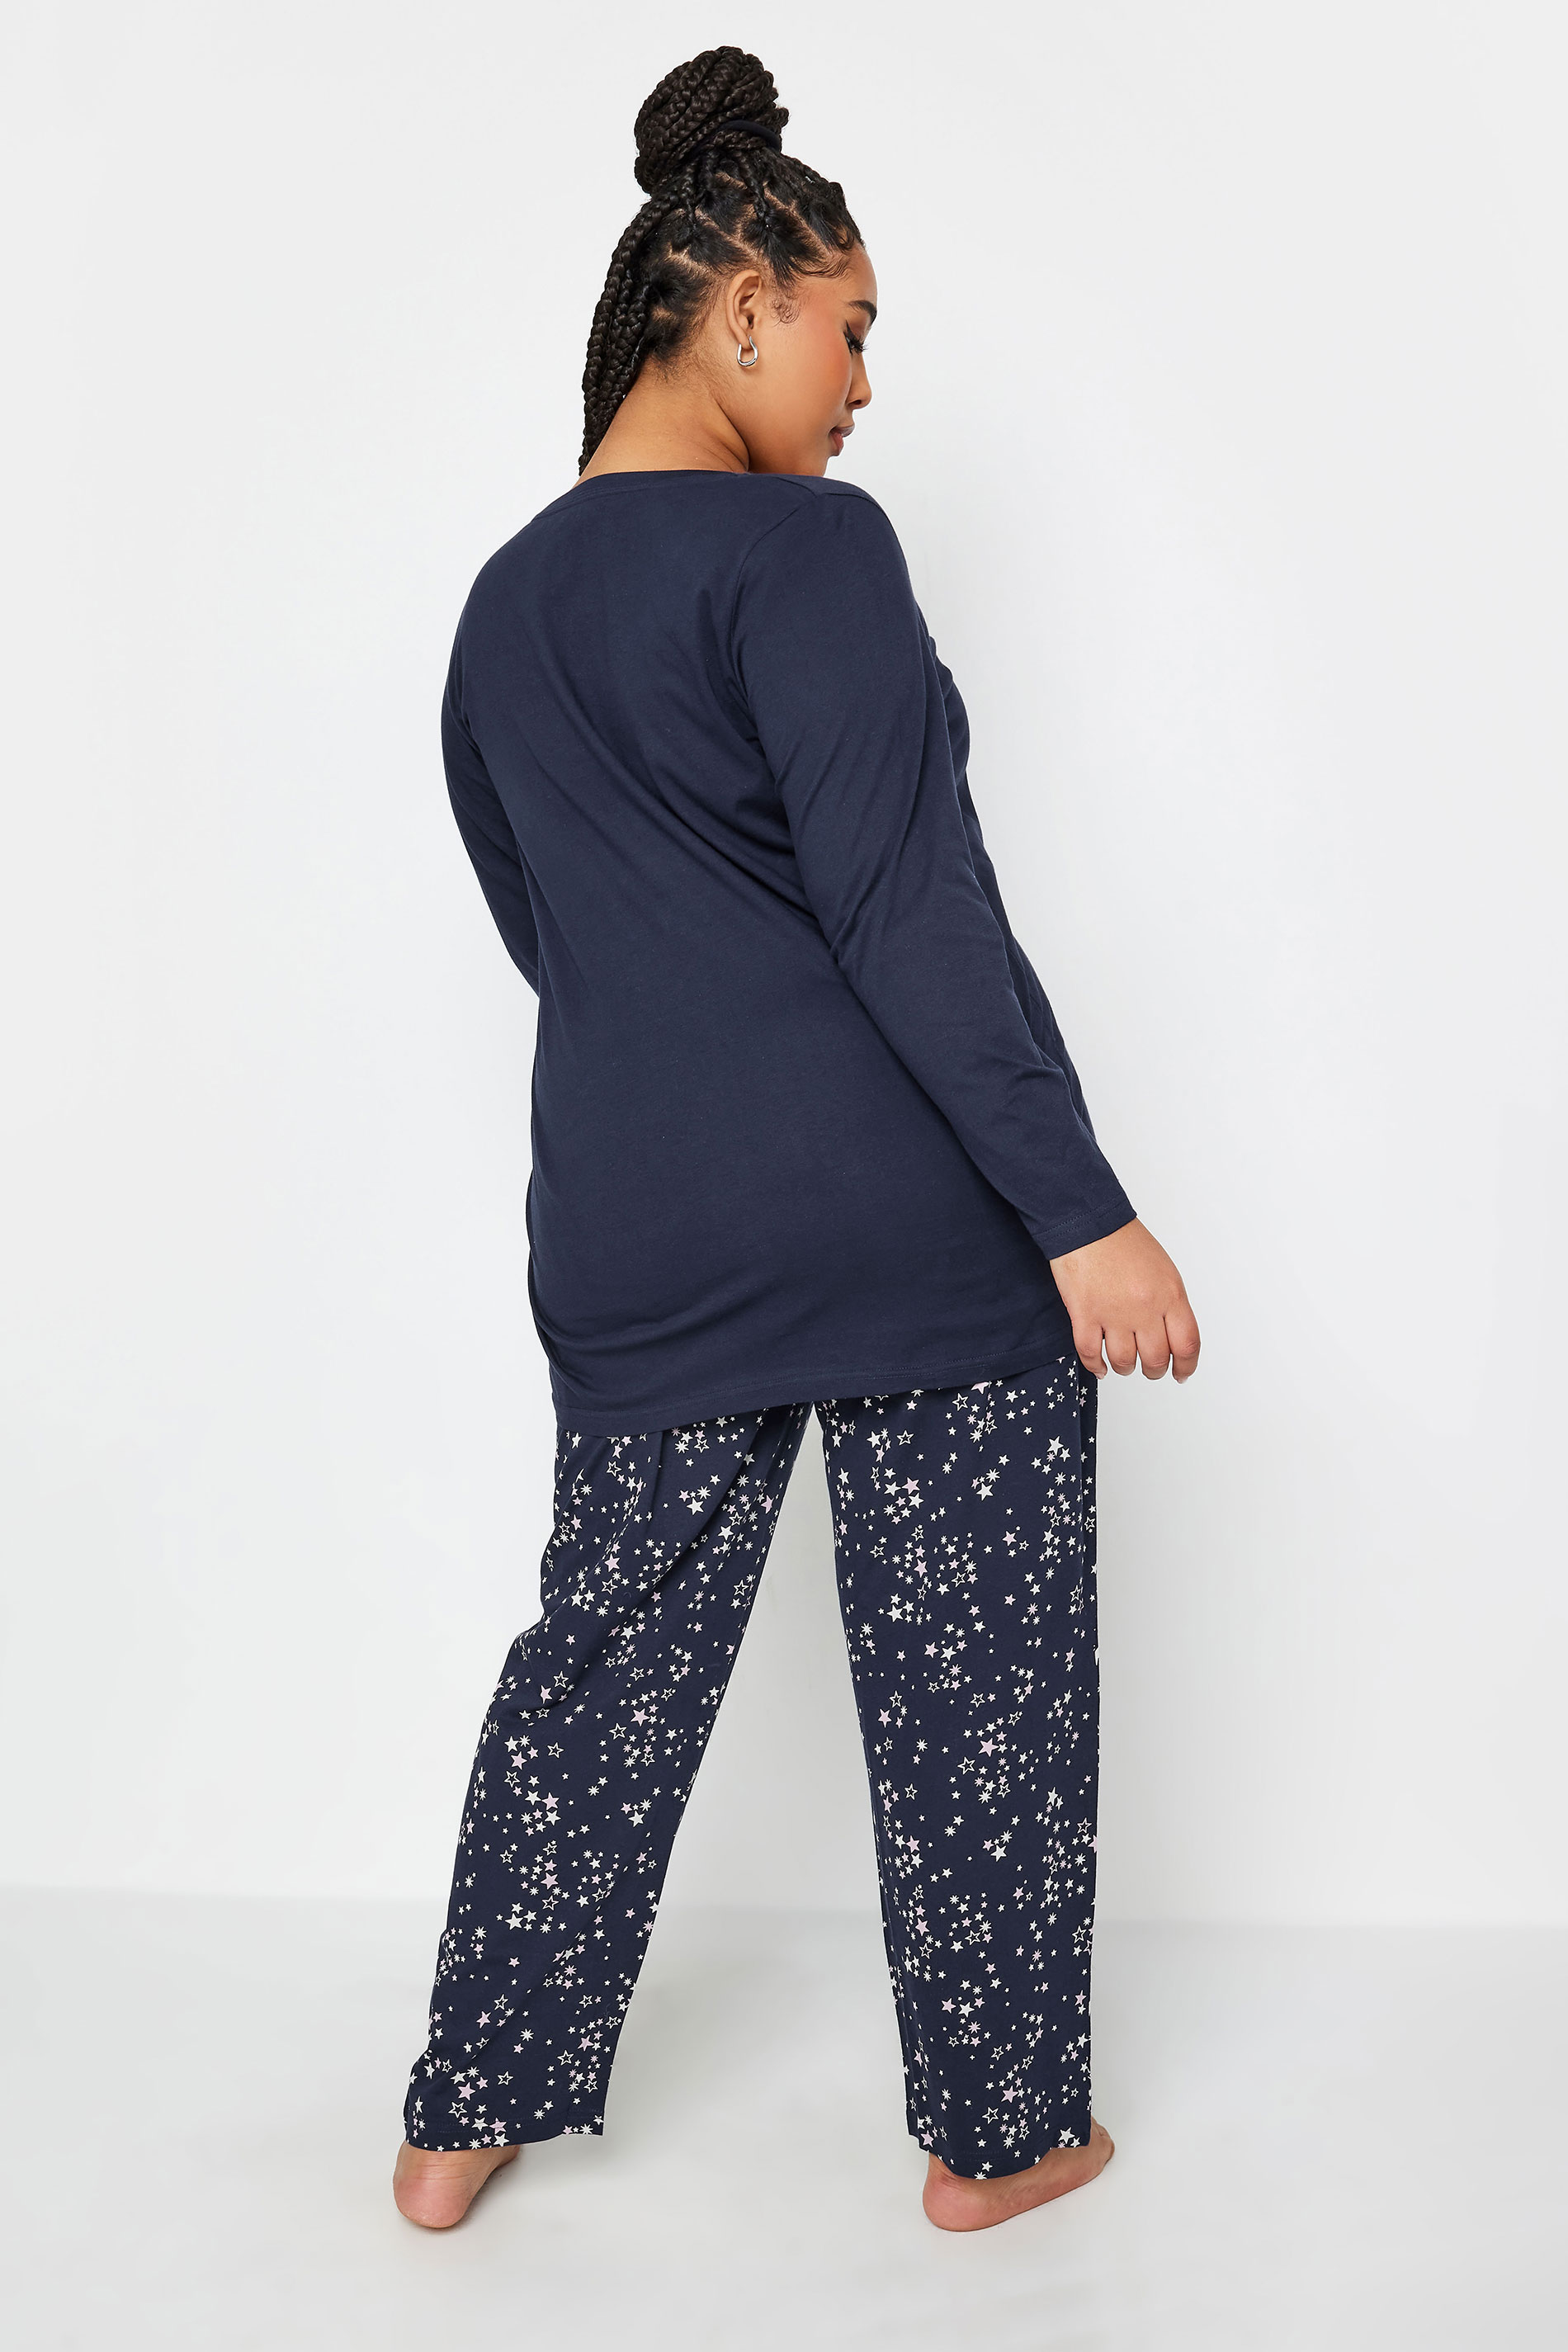 YOURS Plus Size Navy Blue 'Night Sky' Star Print Pyjama Set | Yours Clothing 3